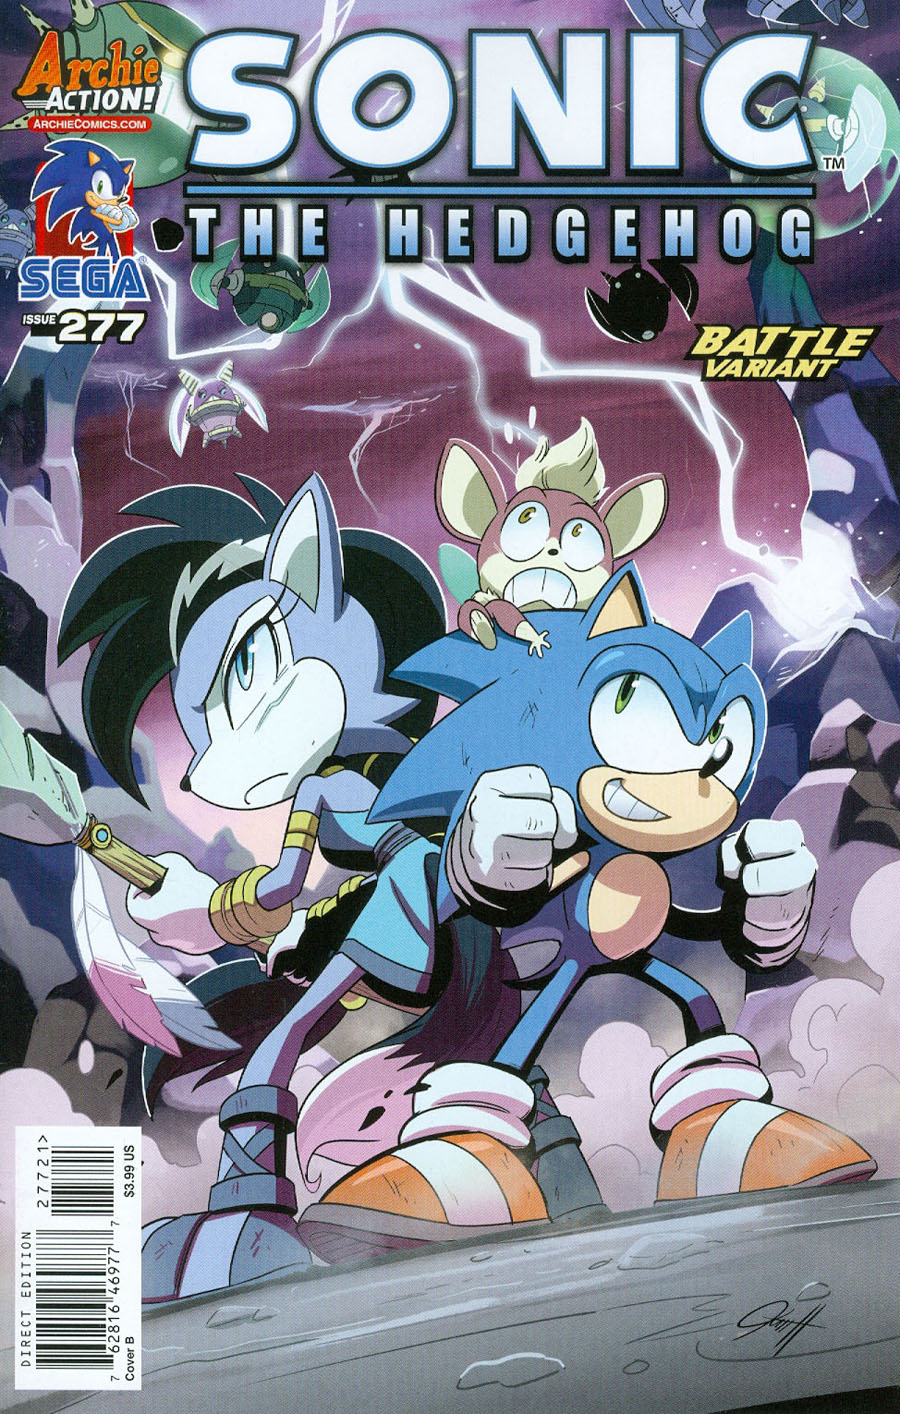 Sonic The Hedgehog Vol 2 #277 Cover B Variant Tyson Hesse Battle Cover